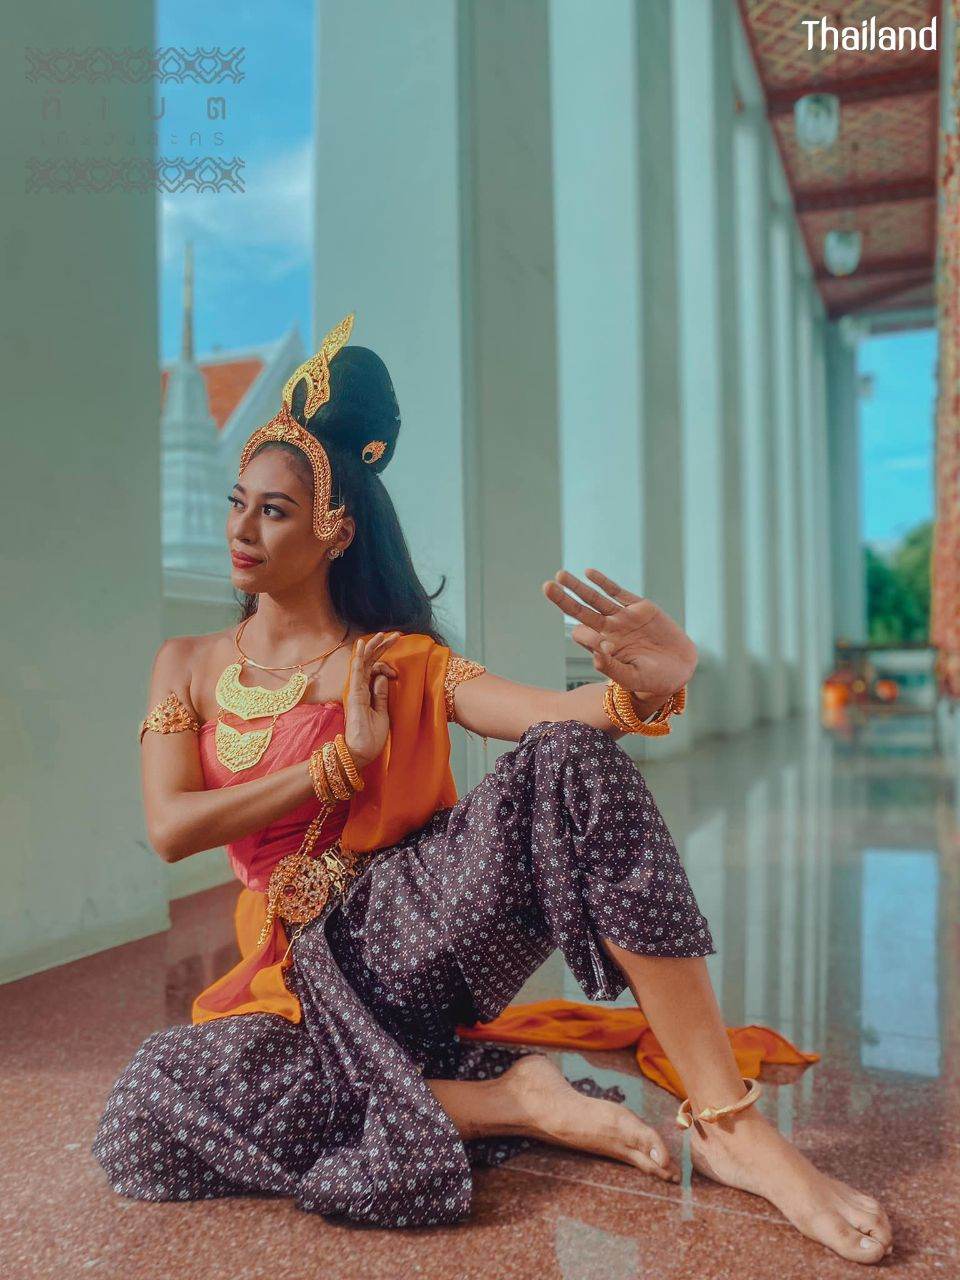 THAILAND 🇹🇭 | Srivijaya era, การแต่งกายสมัยศรีวิชัย